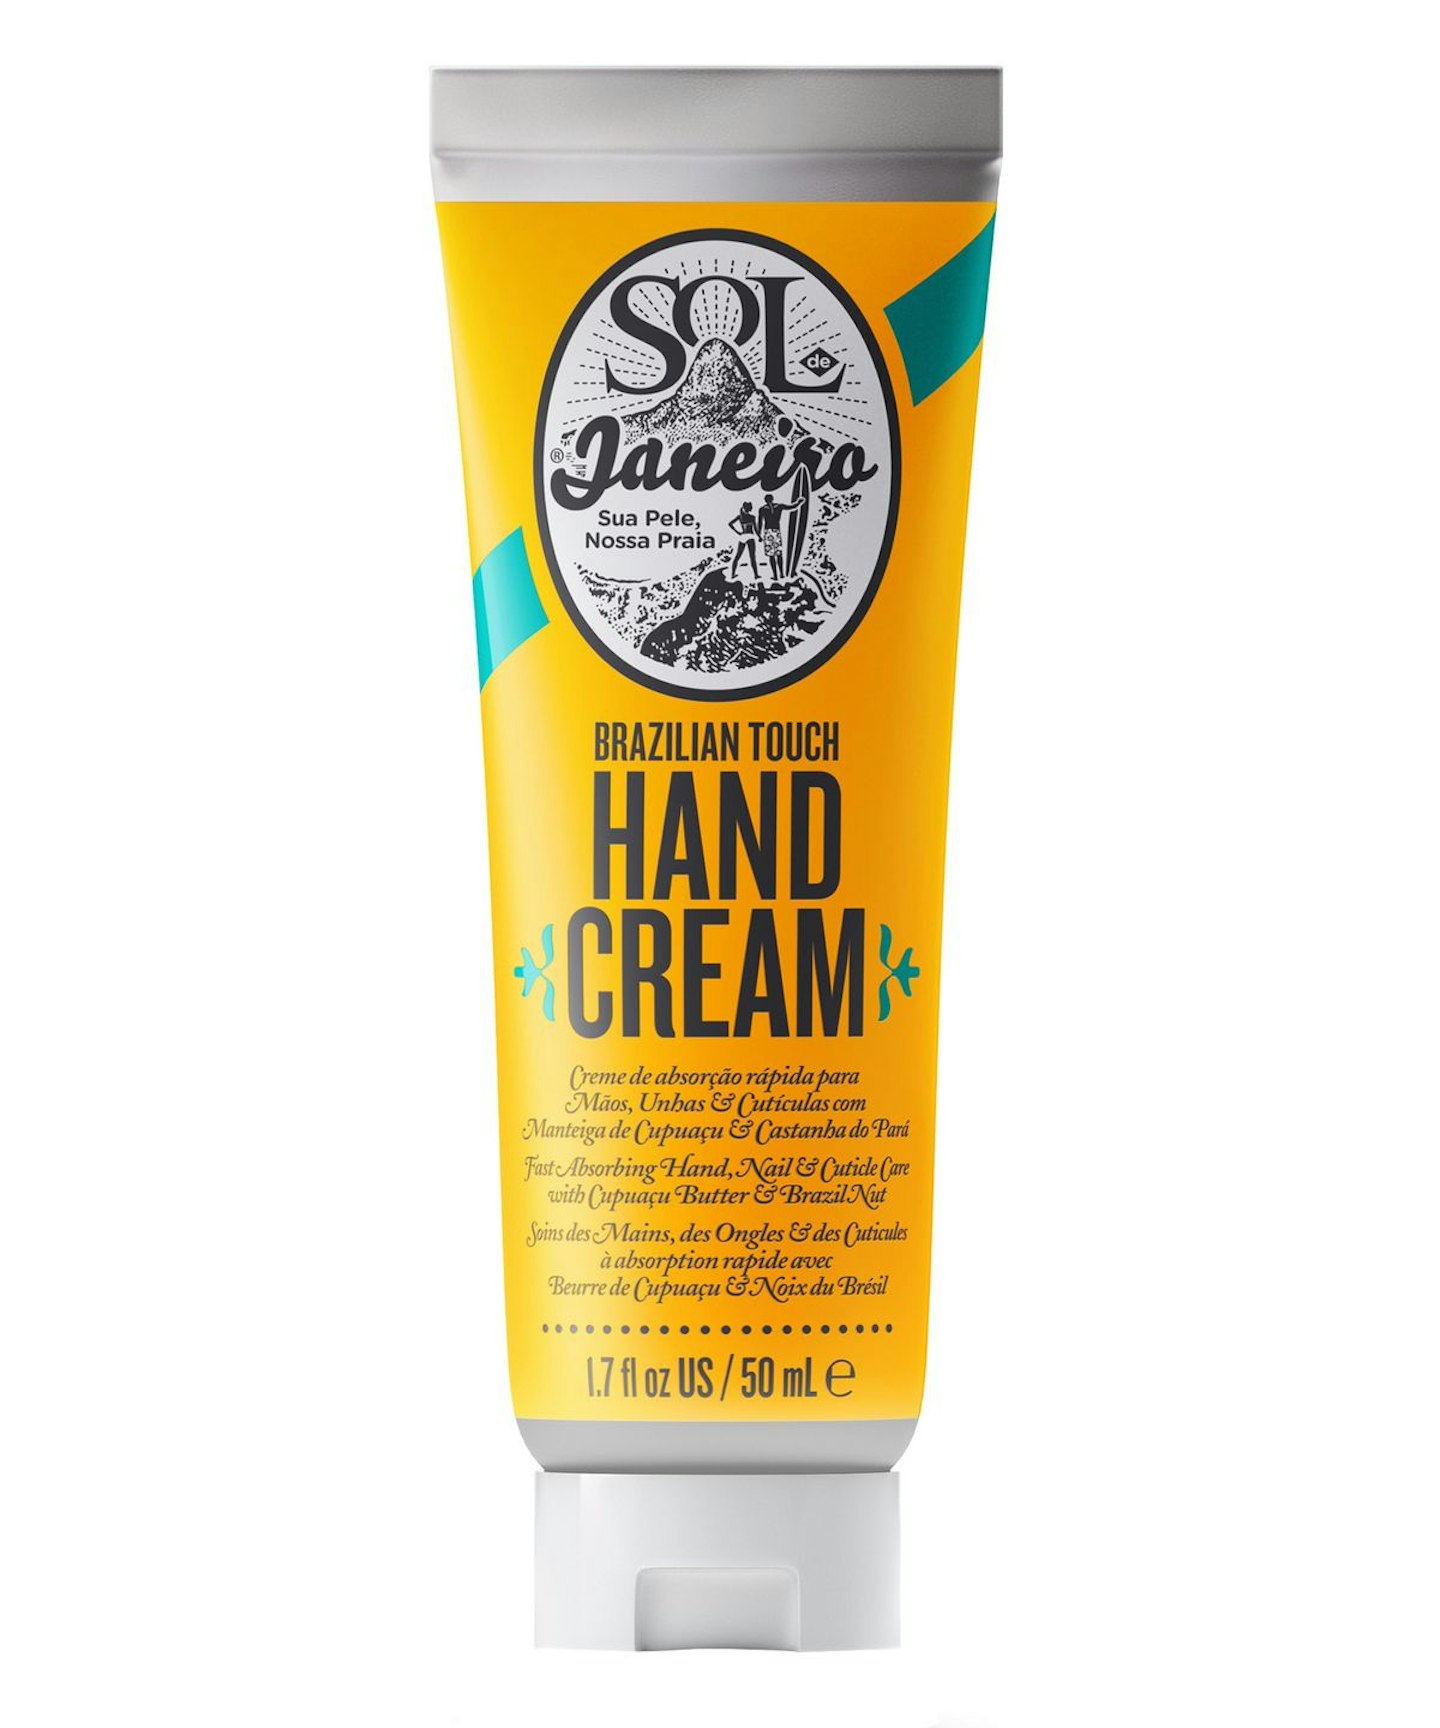 Sol de Janeiro Brazilian Touch Hand Cream